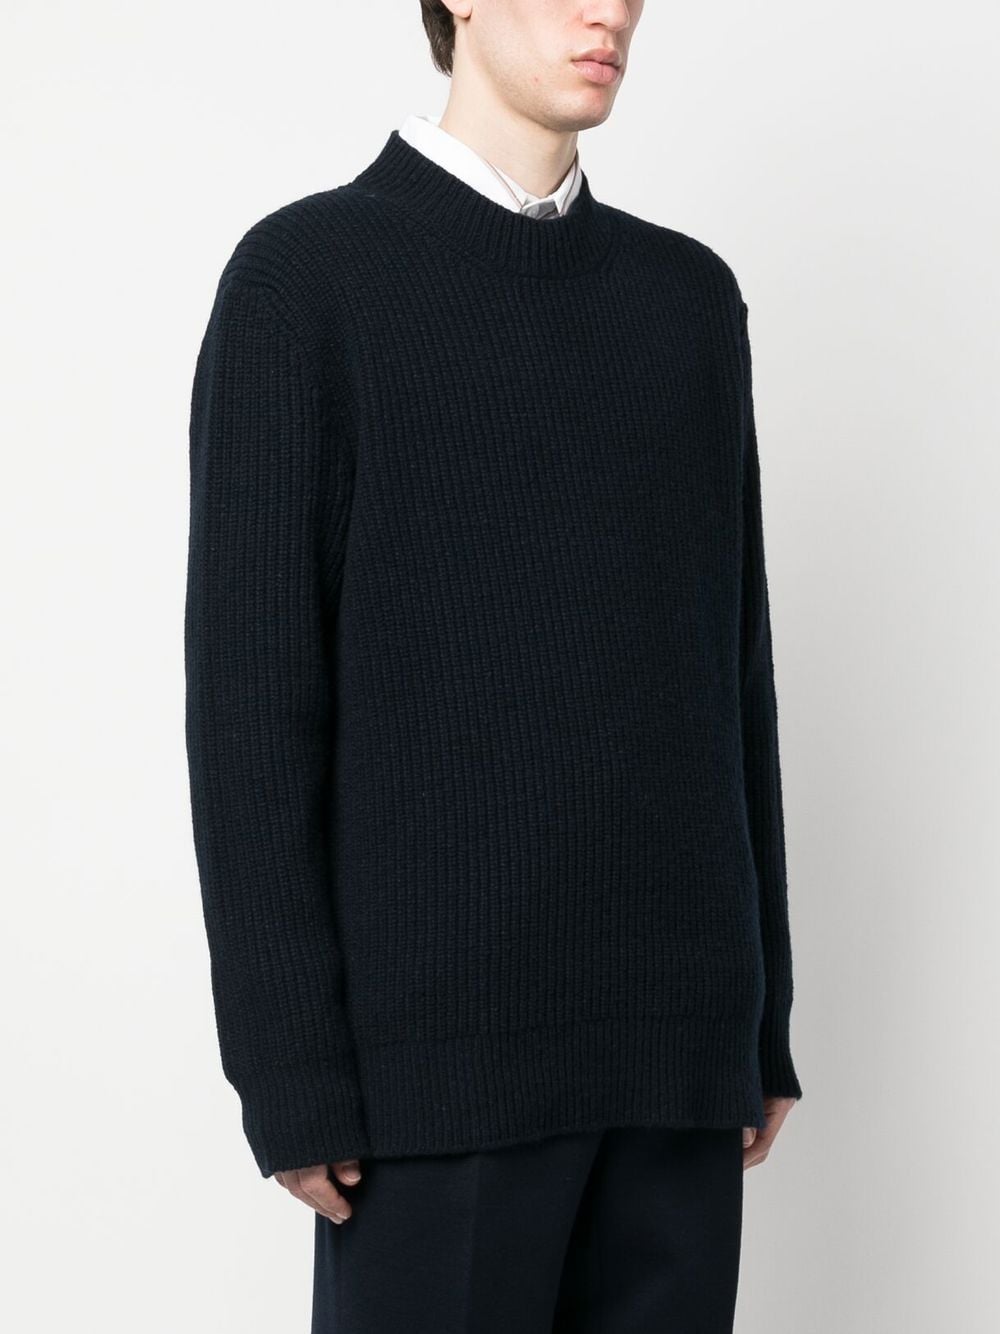 Donegal wool-blend jumper